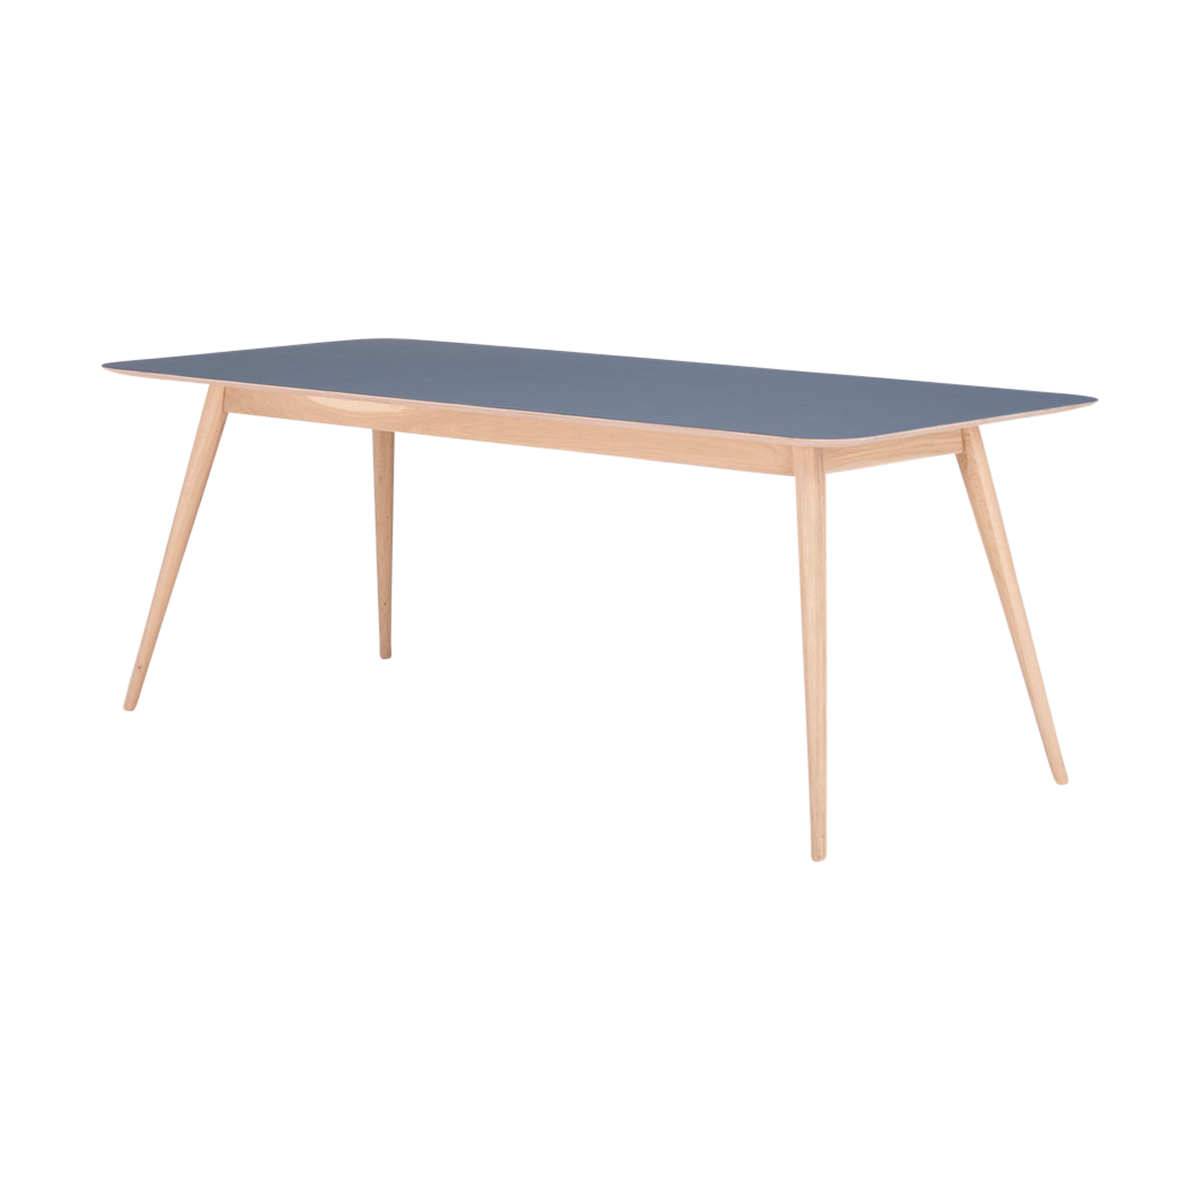 Stafa table houten eettafel whitewash - met linoleum tafelblad smokey blue - 200 x 90 cm